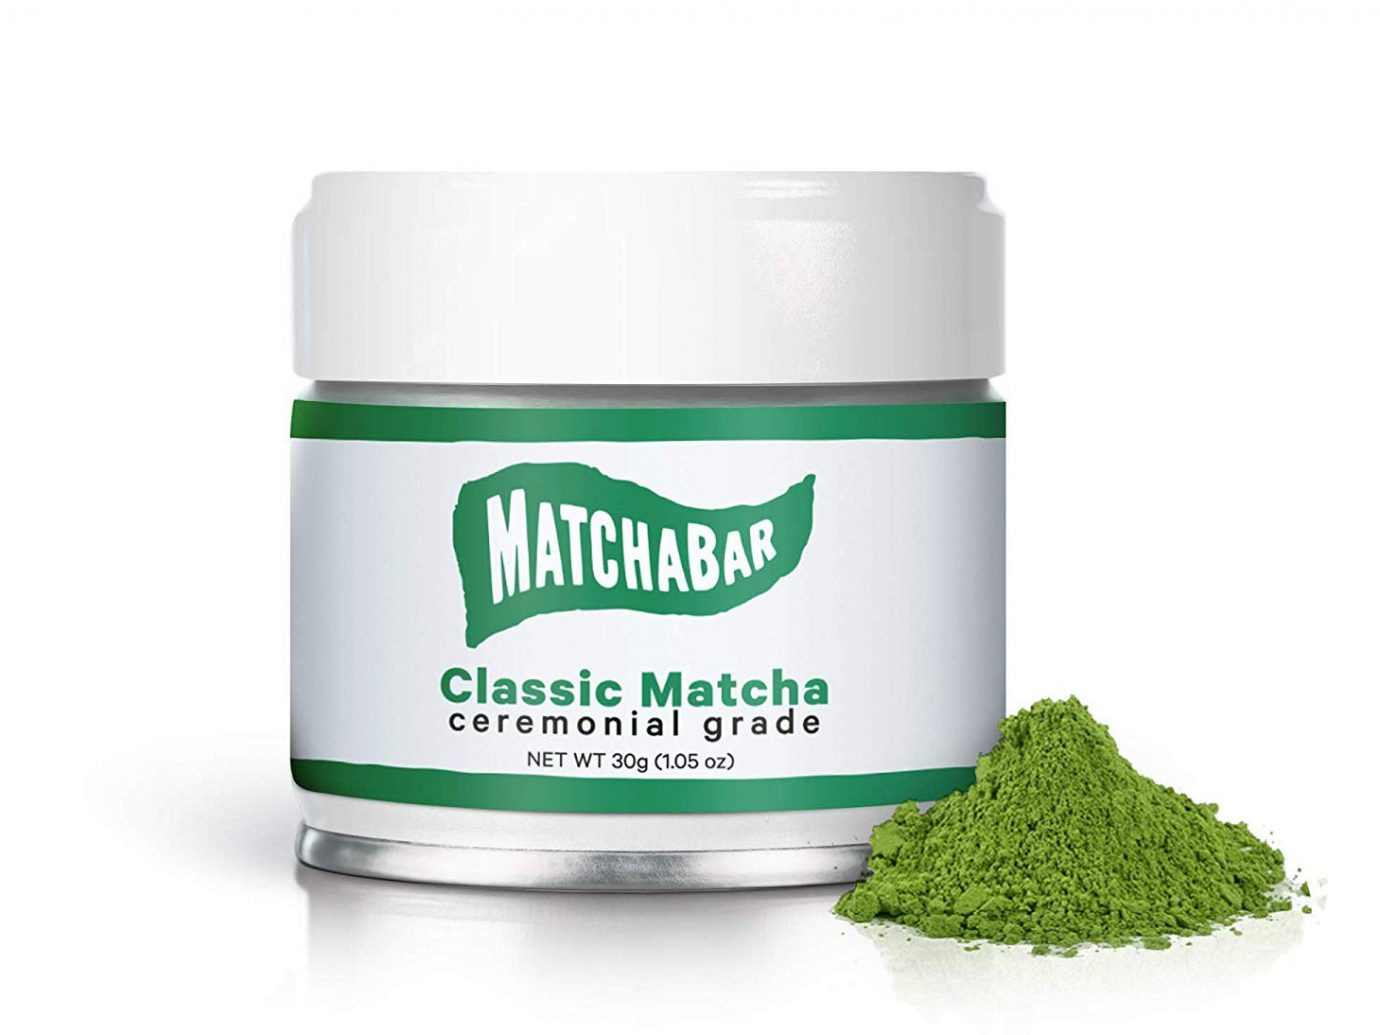 MatchaBar Ceremonial Grade Matcha Green Tea Powder